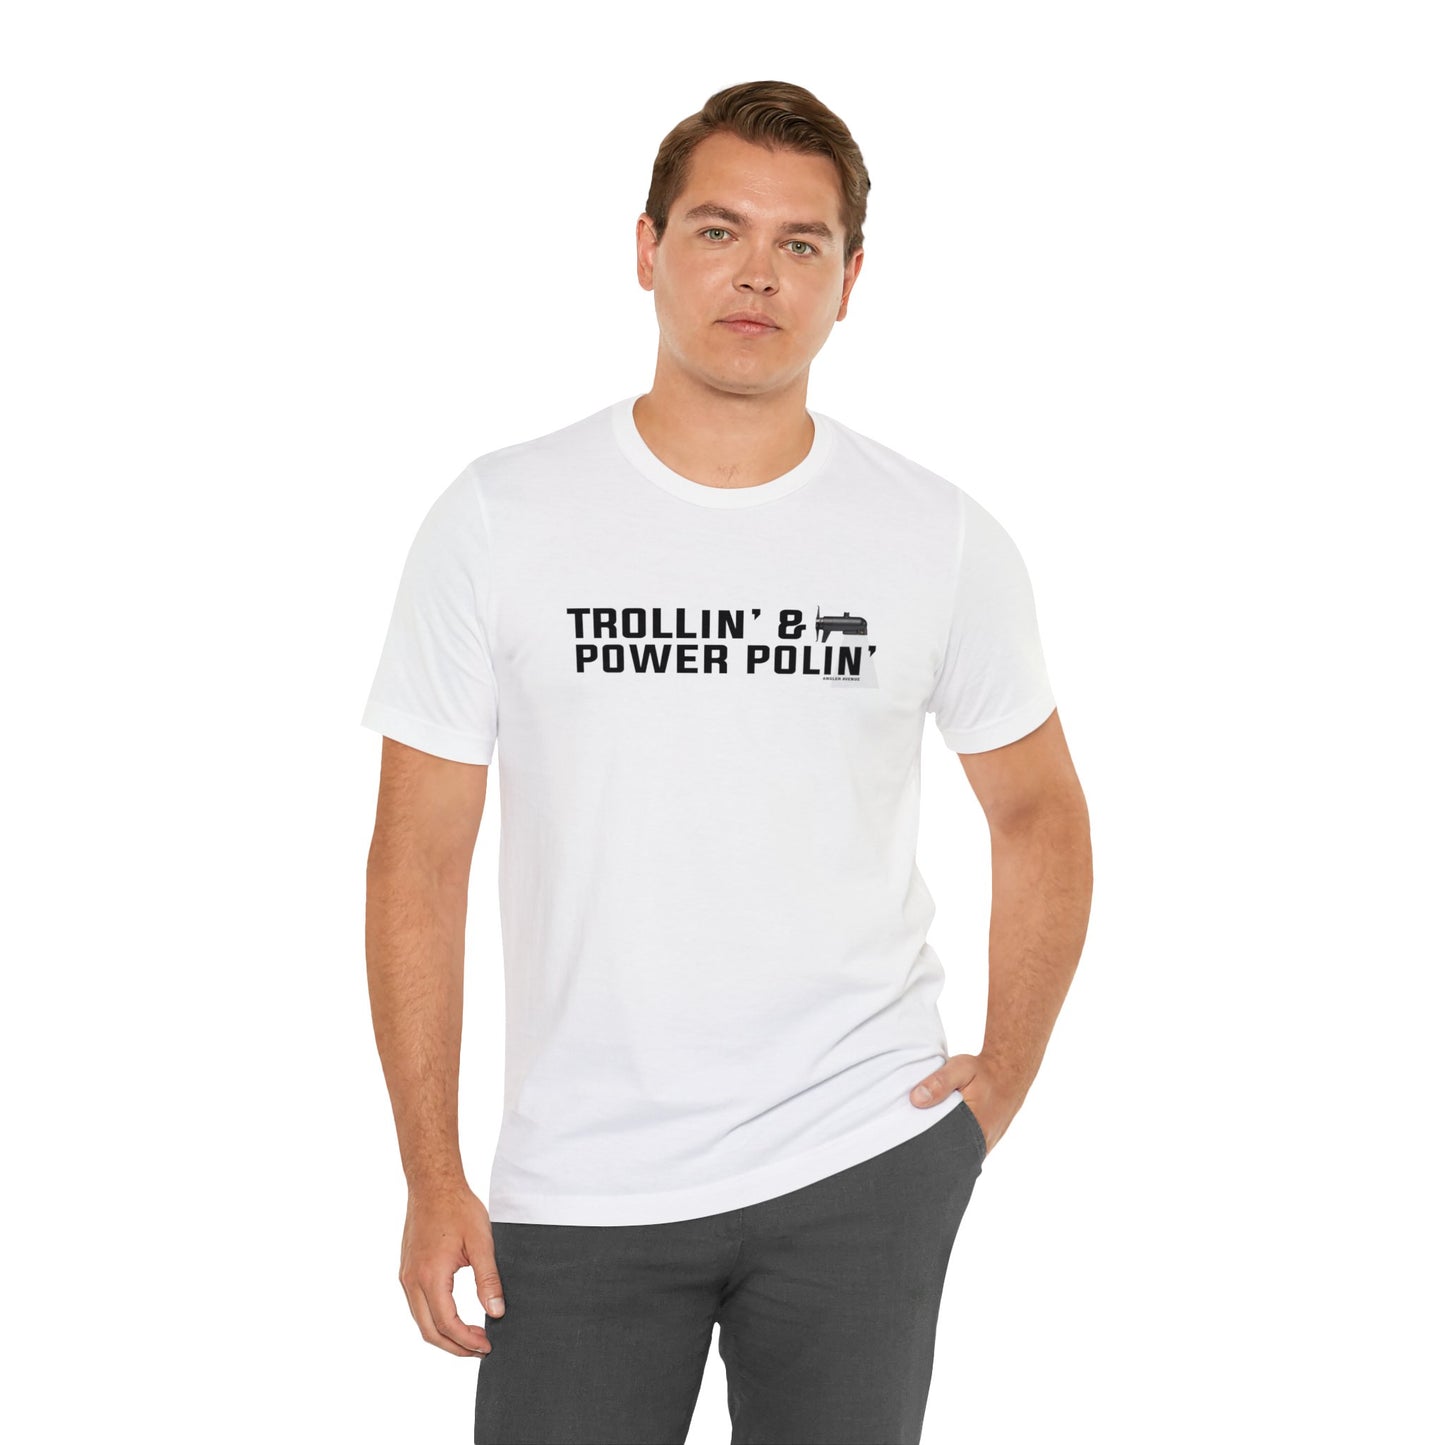 Trollin' and Power Polin' T-Shirt